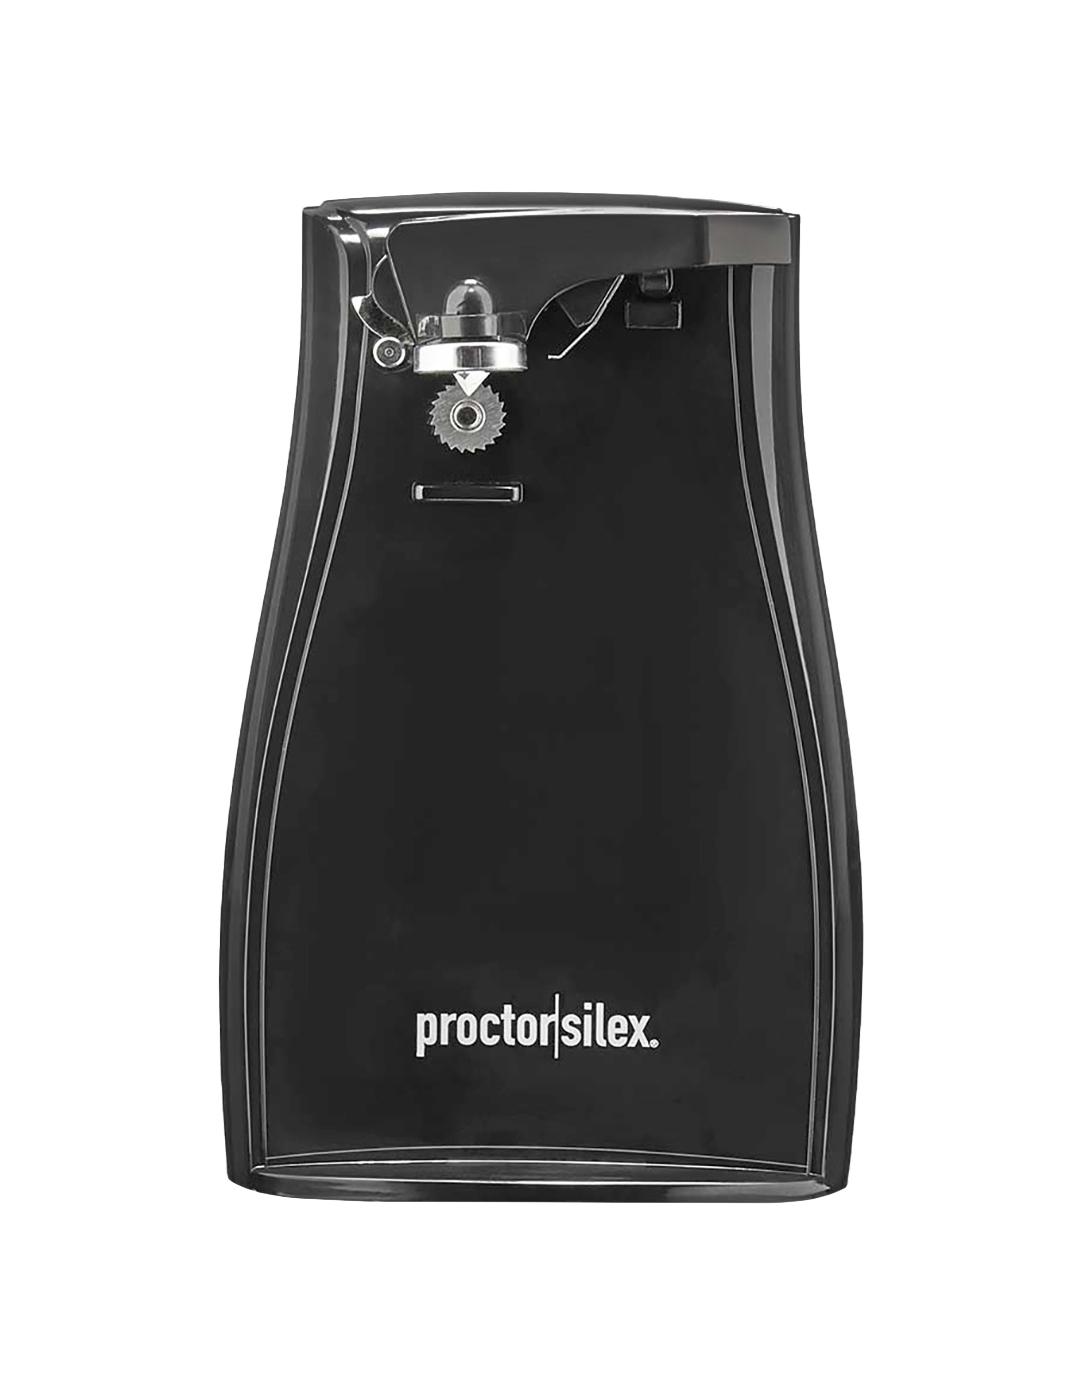 Proctor Silex Power Opener Can Opener - Black; image 2 of 2